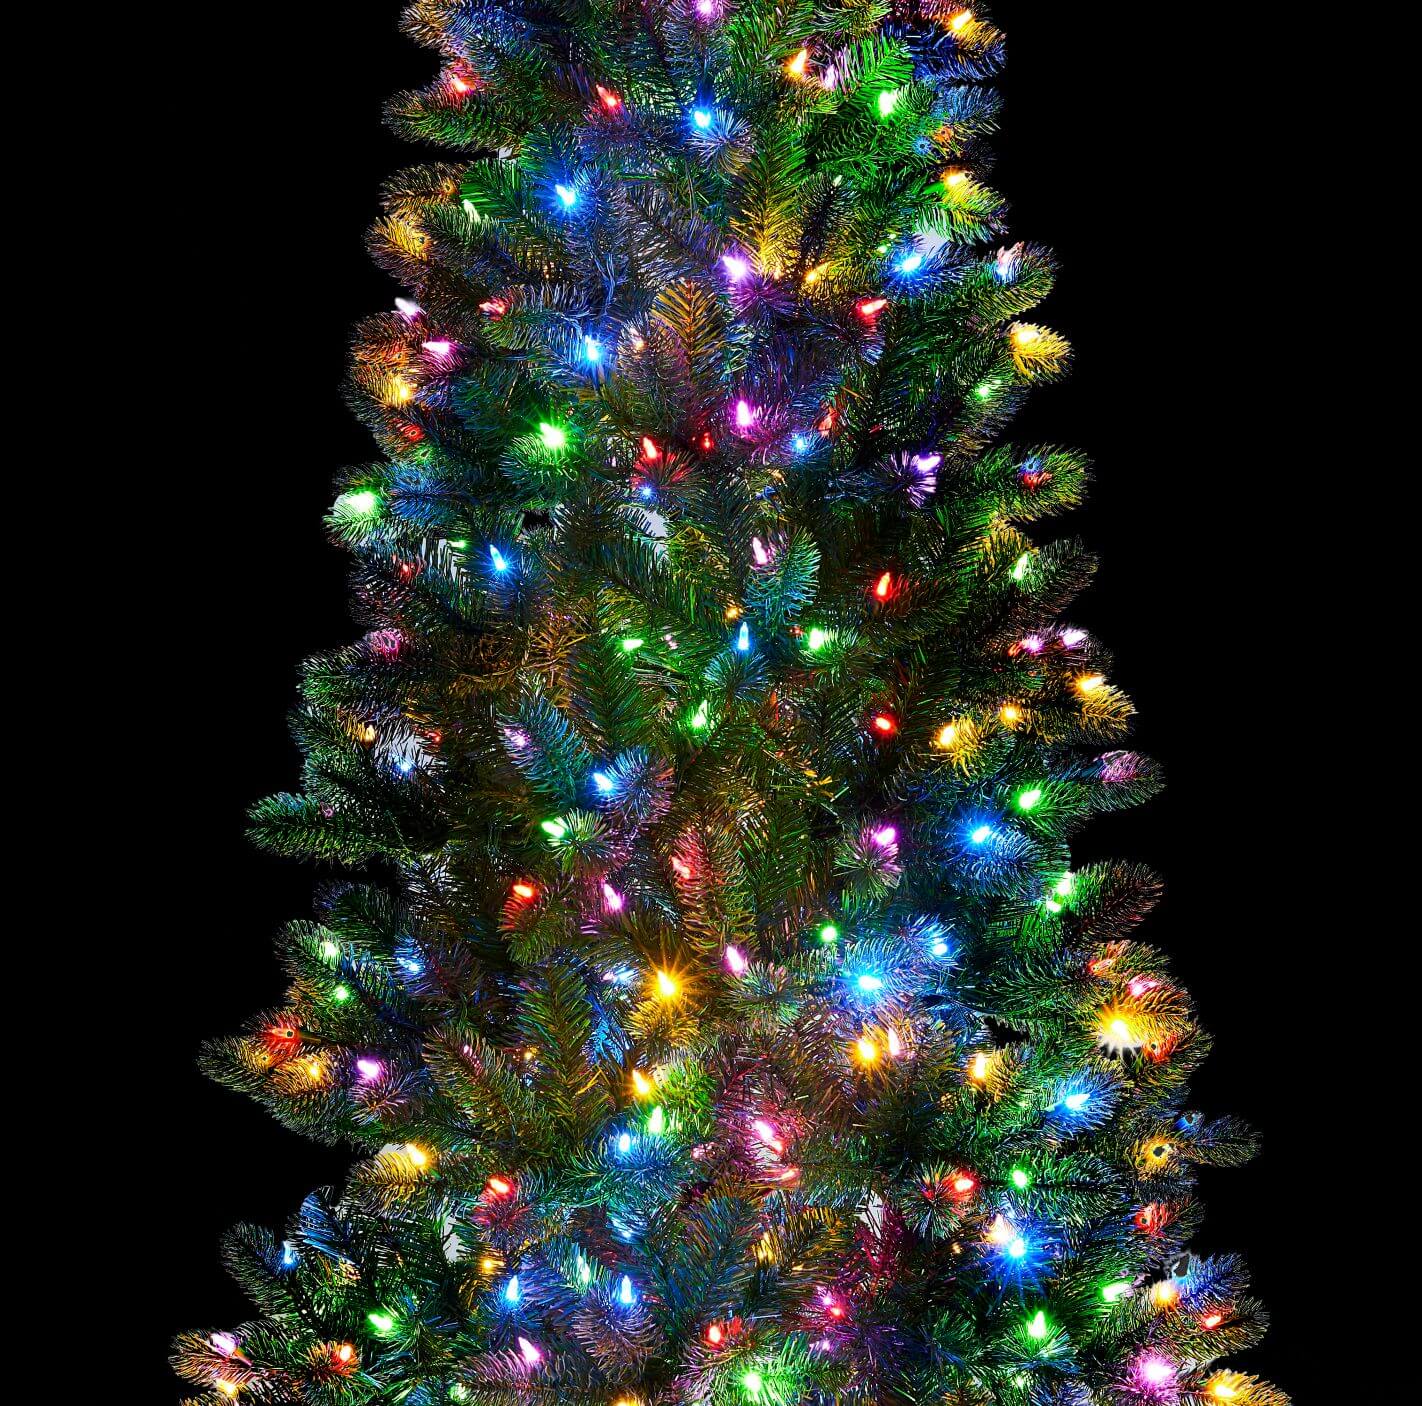 King of Christmas 9' King Douglas Fir Slim Quick-Shape Artificial Christmas Tree with 750 Warm White & Multi-Color LED Lights